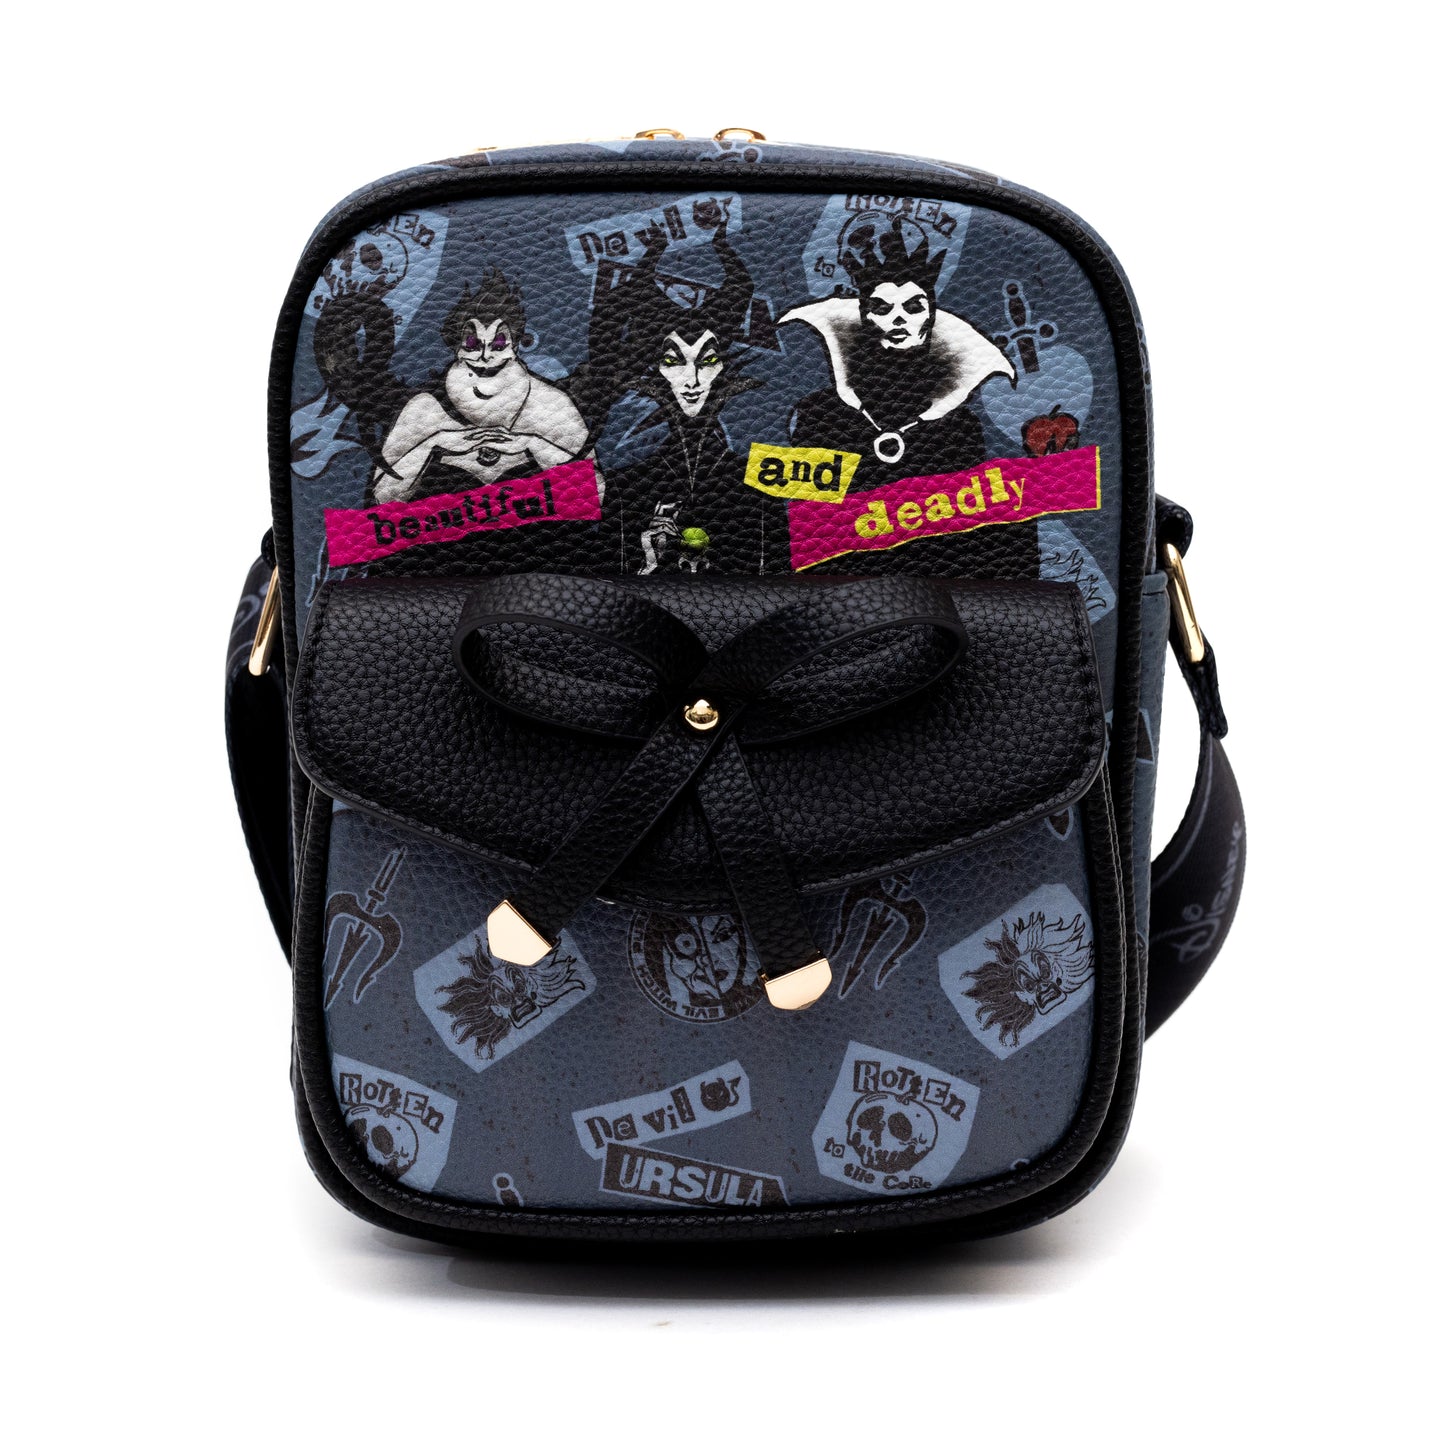 Wondapop Disney Villains Luxe 8 Crossbody Bag